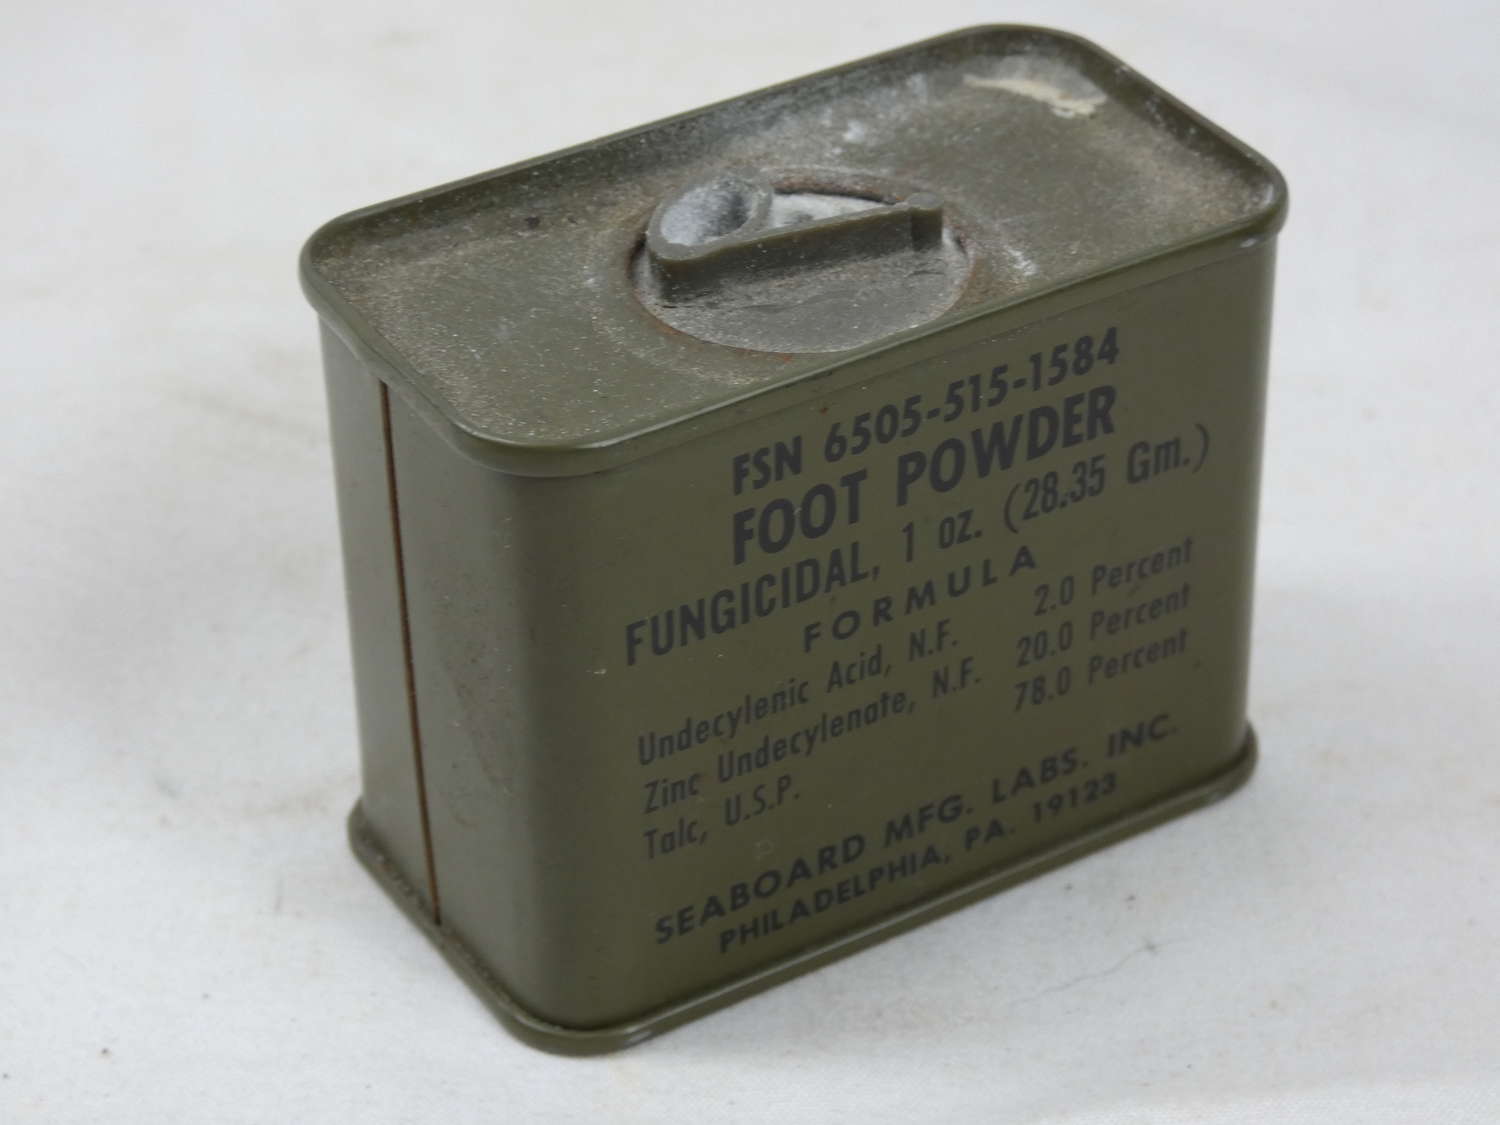 Vietnam War U.S. Army Foot Powder With Contents